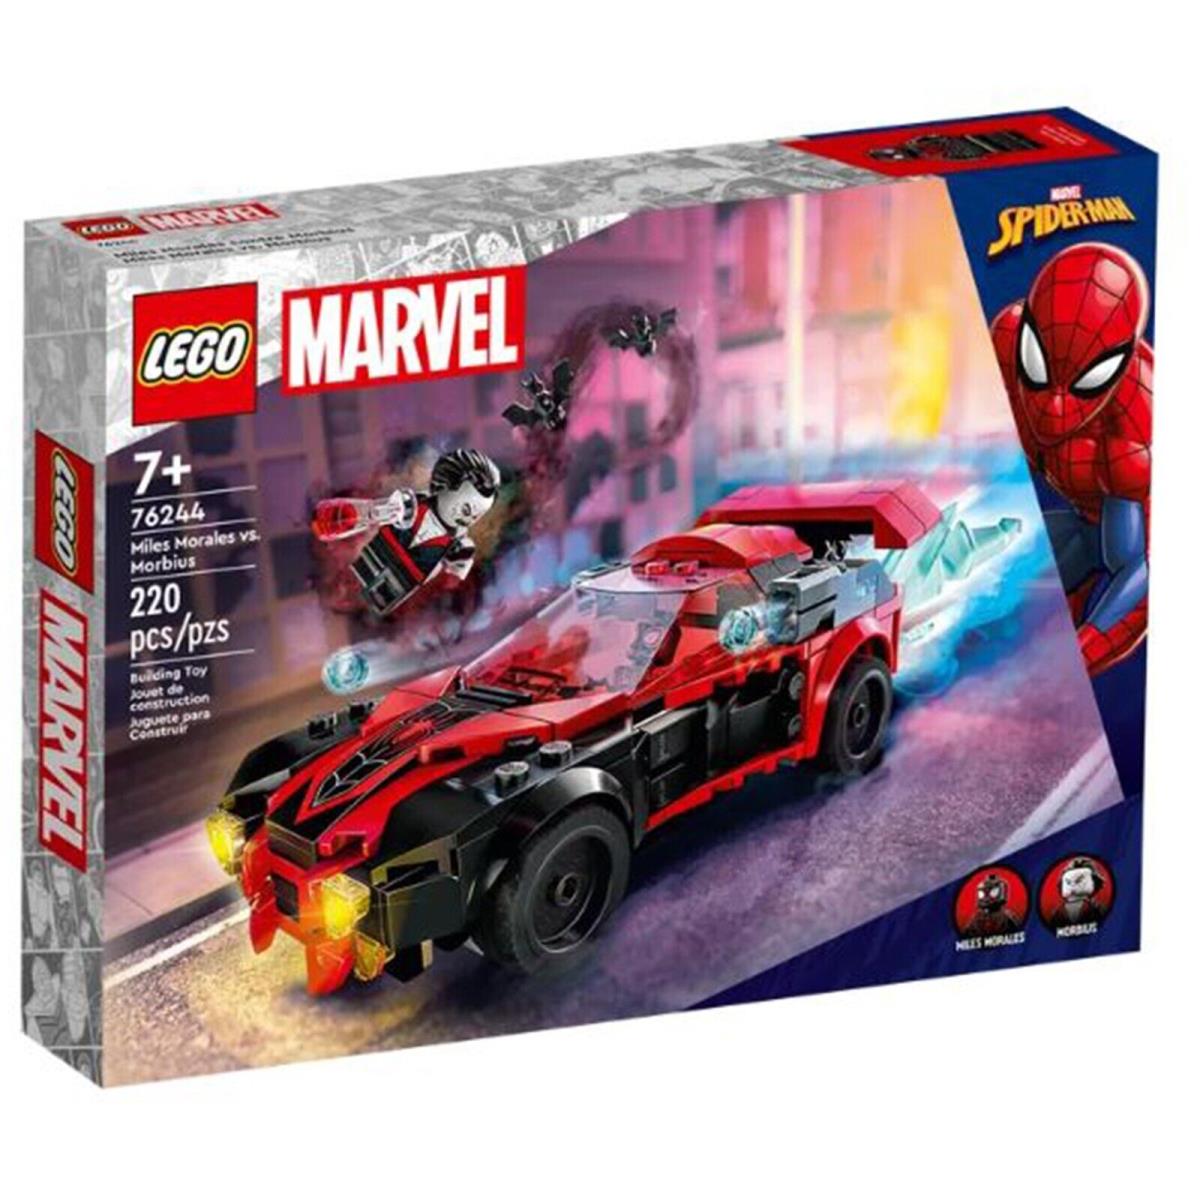 Lego Marvel Miles Morales Vs Morbius Building Set 76244